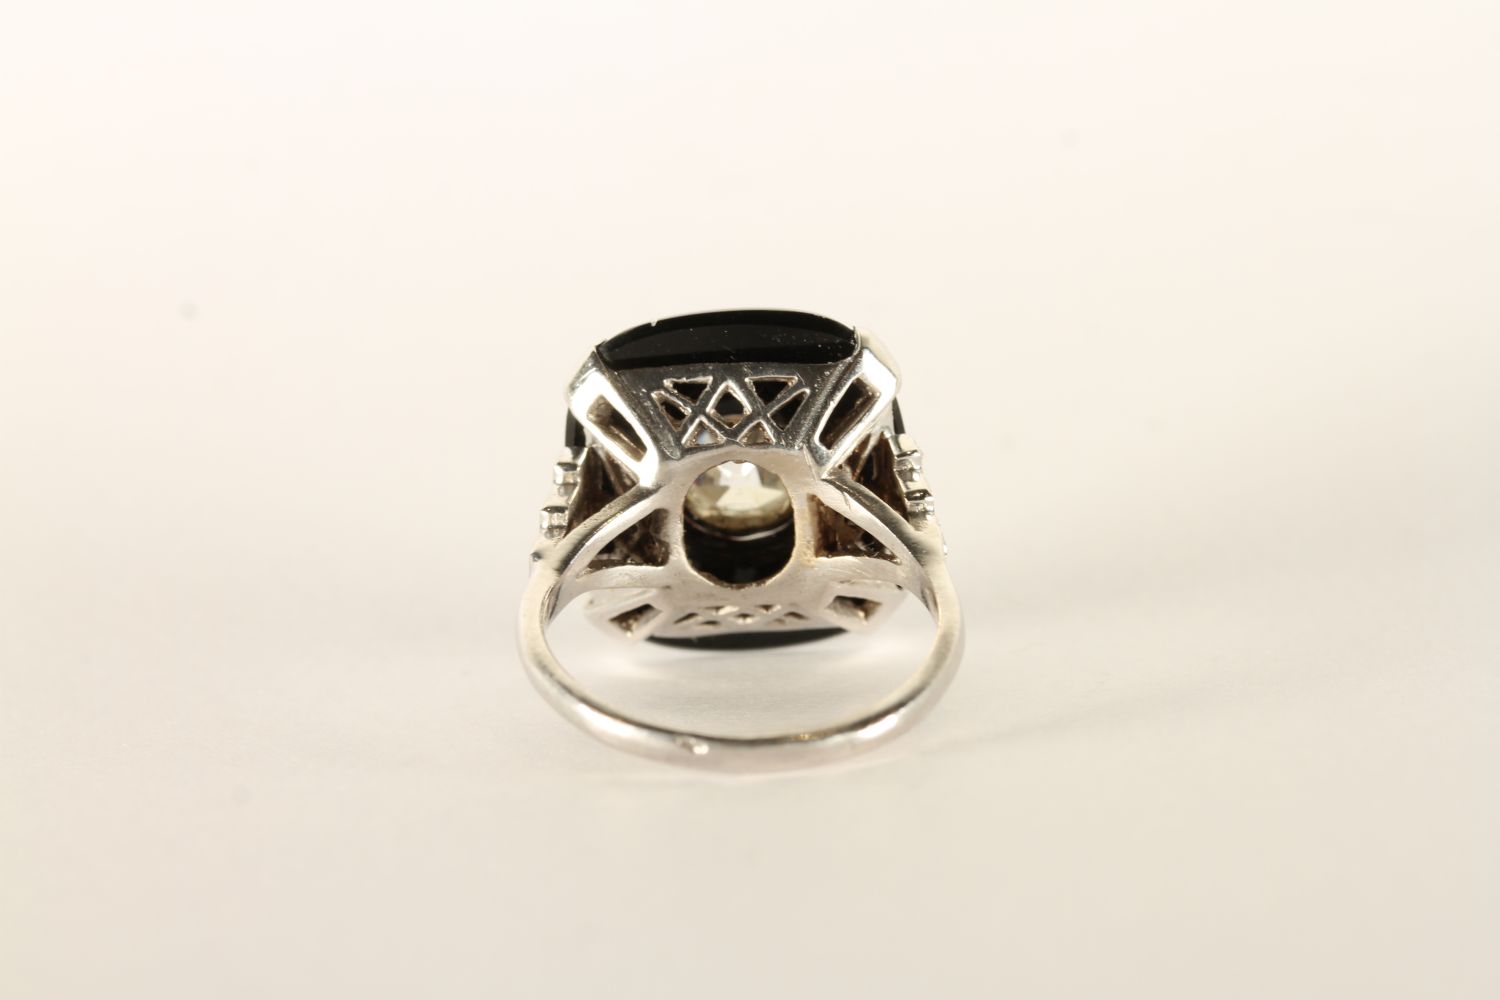 Art Deco Onyx And Diamond Dress Ring, feature cushion cut diamond, estimated weight 1.22ct, set - Image 3 of 3